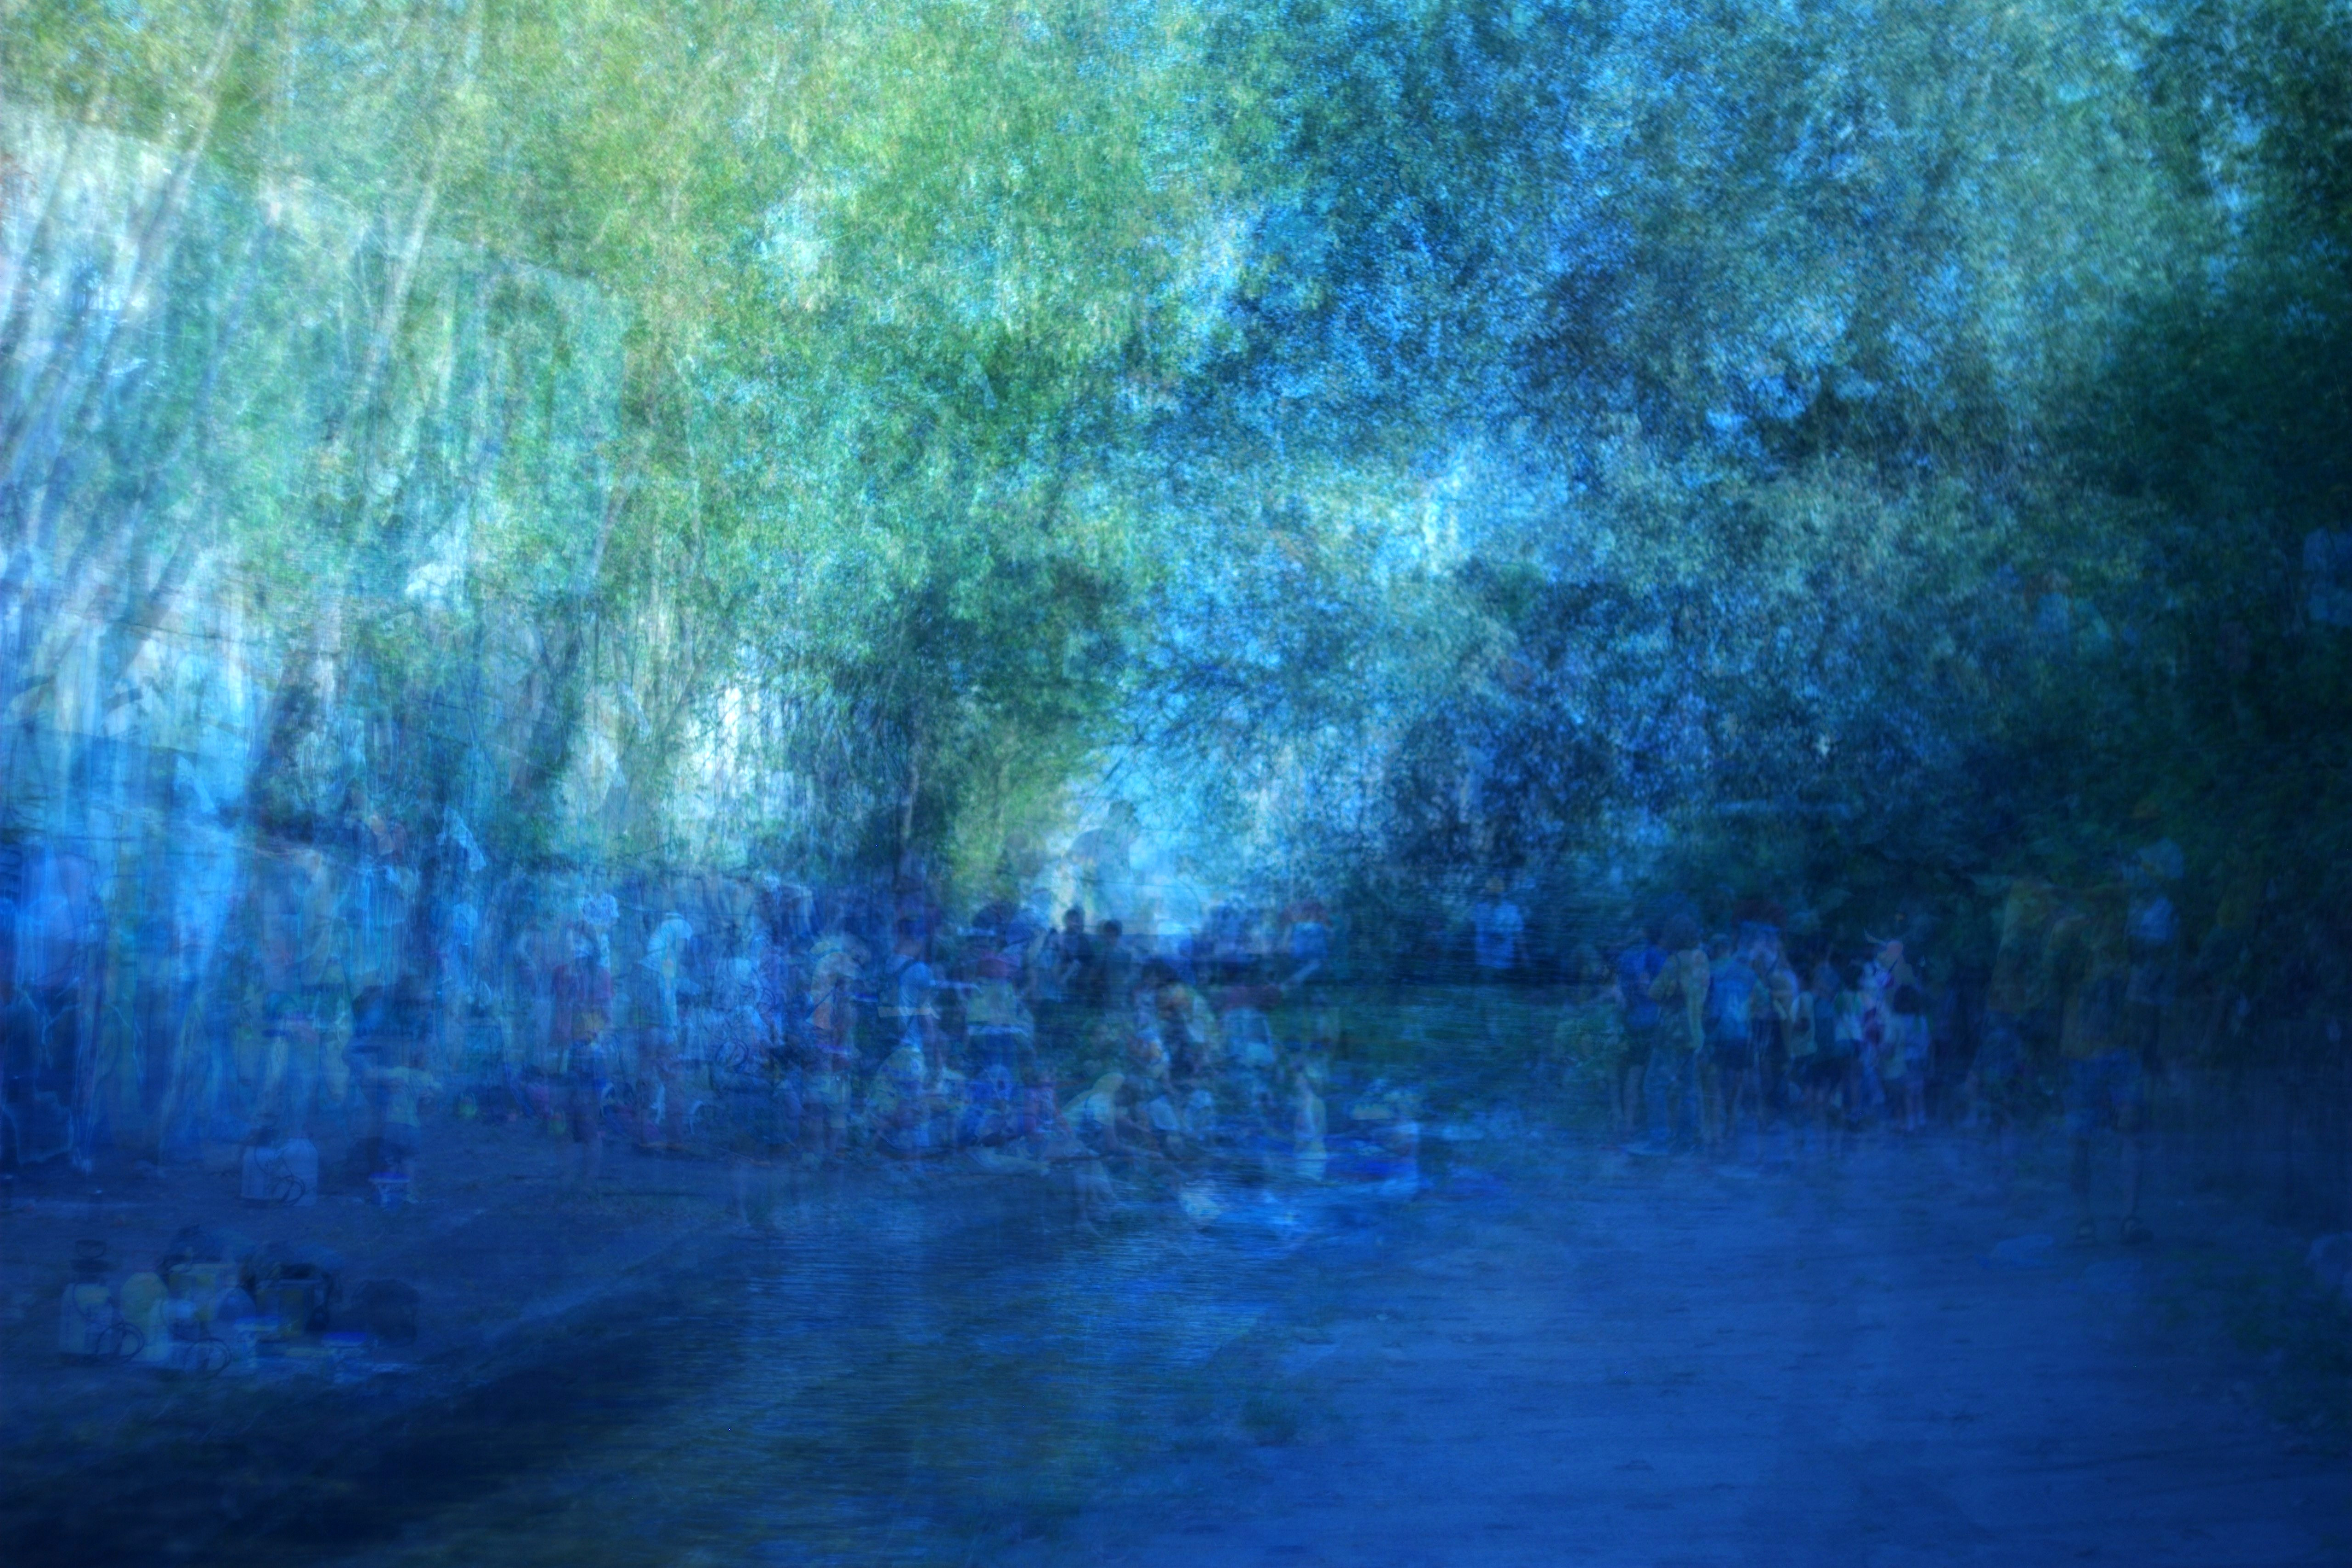 Goodbye Summer (On Lybid River). Digital collage by Hvrenja